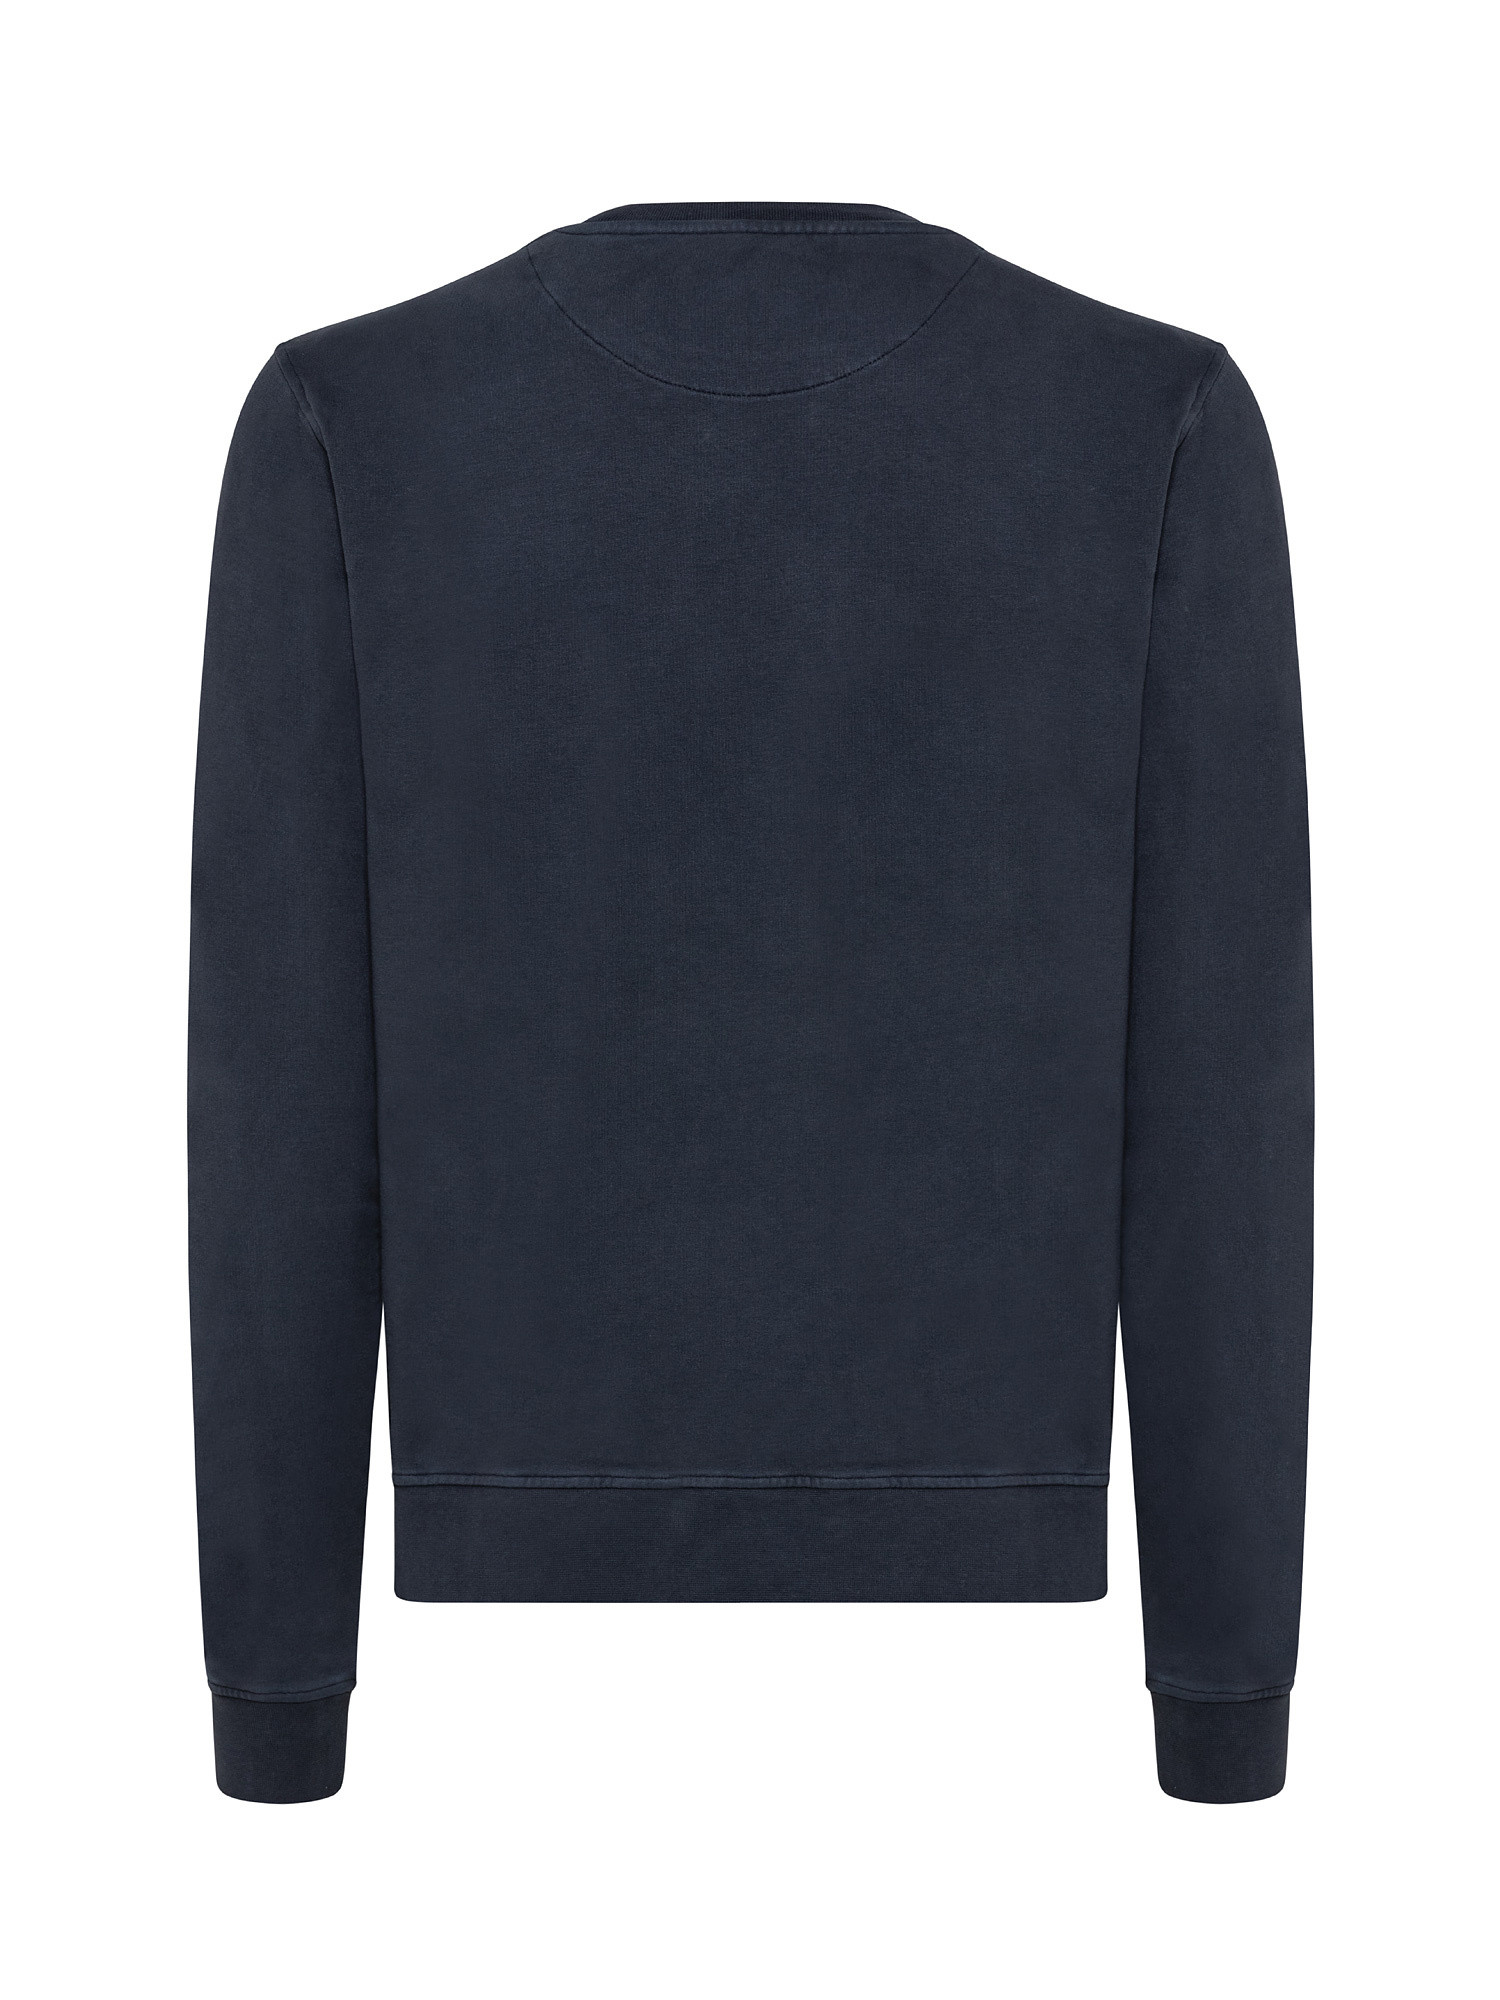 AUTHENTIC print cotton sweatshirt, Blue, large image number 1